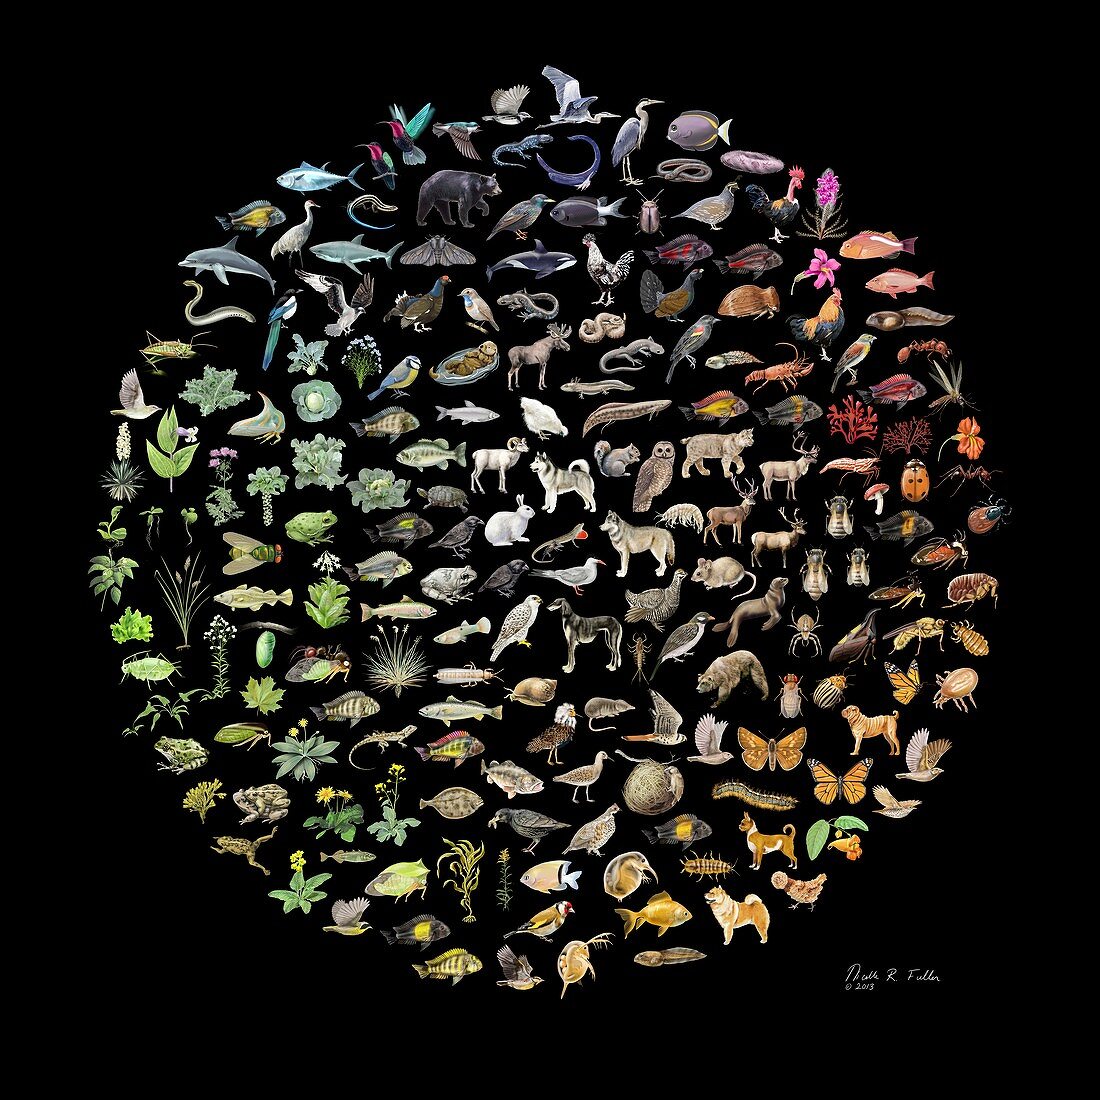 Biodiversity,conceptual illustration